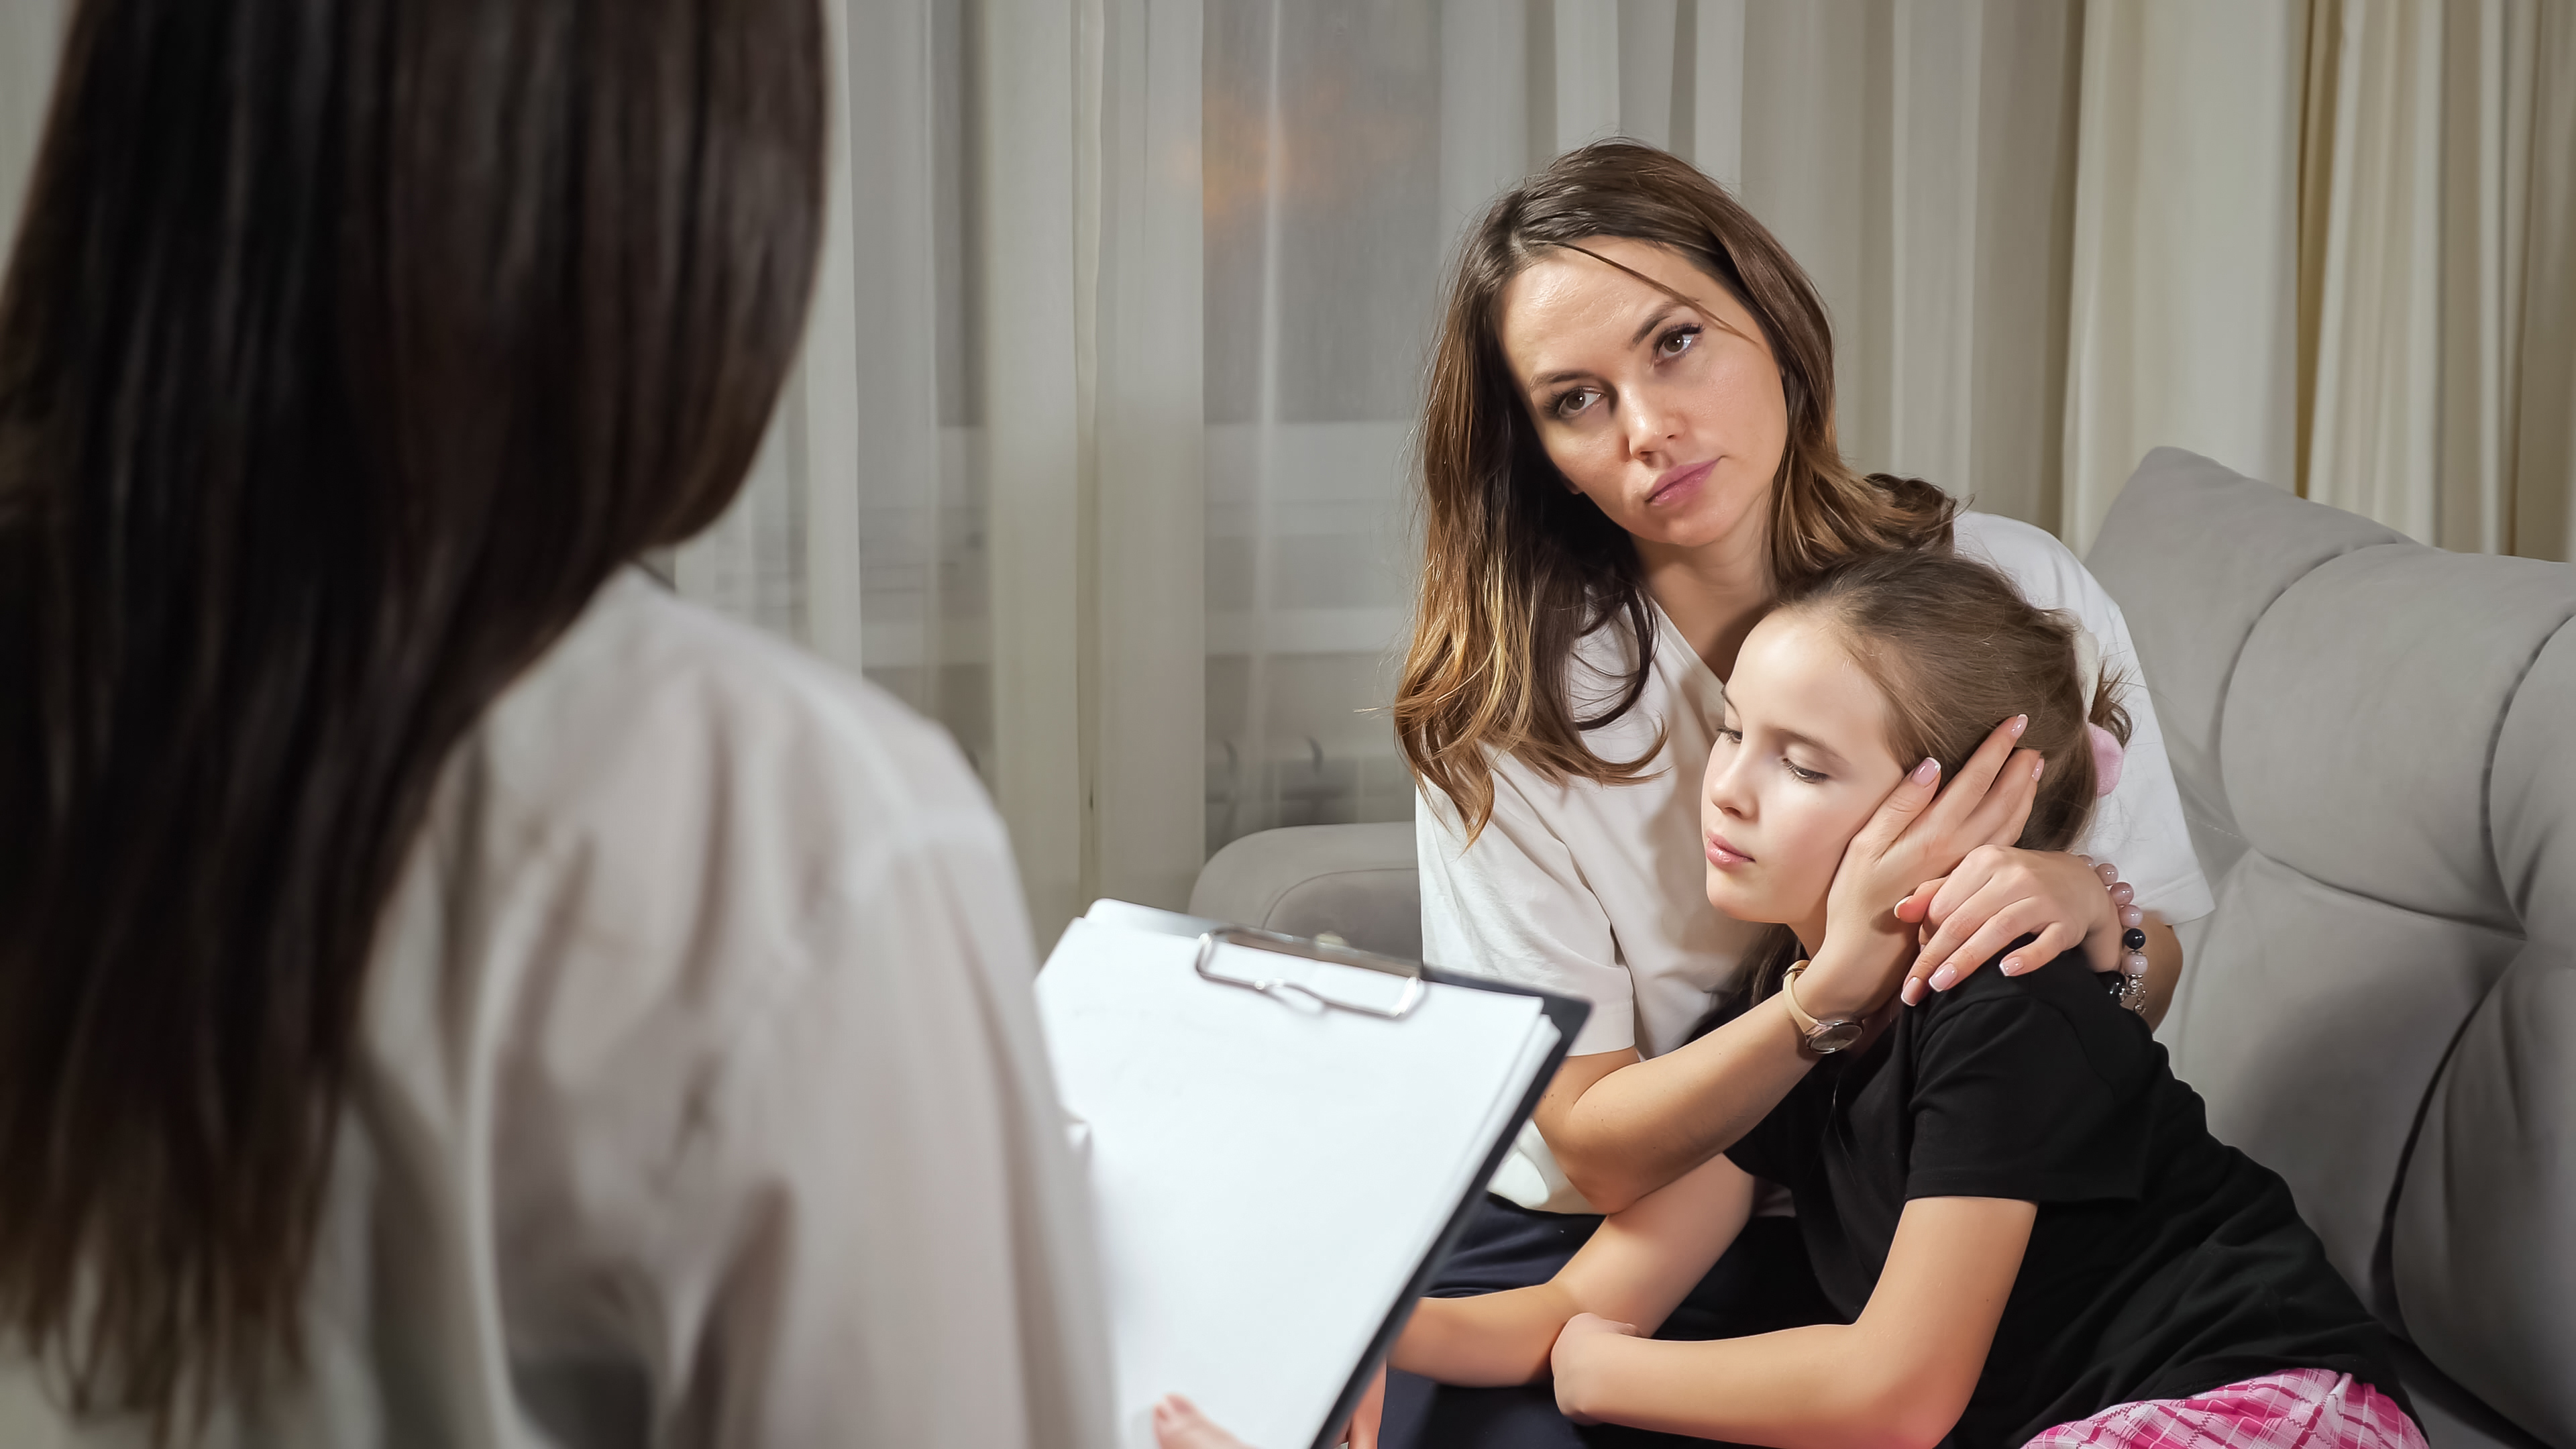 Mom Hosting Sleepover Despite Daughter's Chickenpox Branded 'Unforgivable' - Newsweek